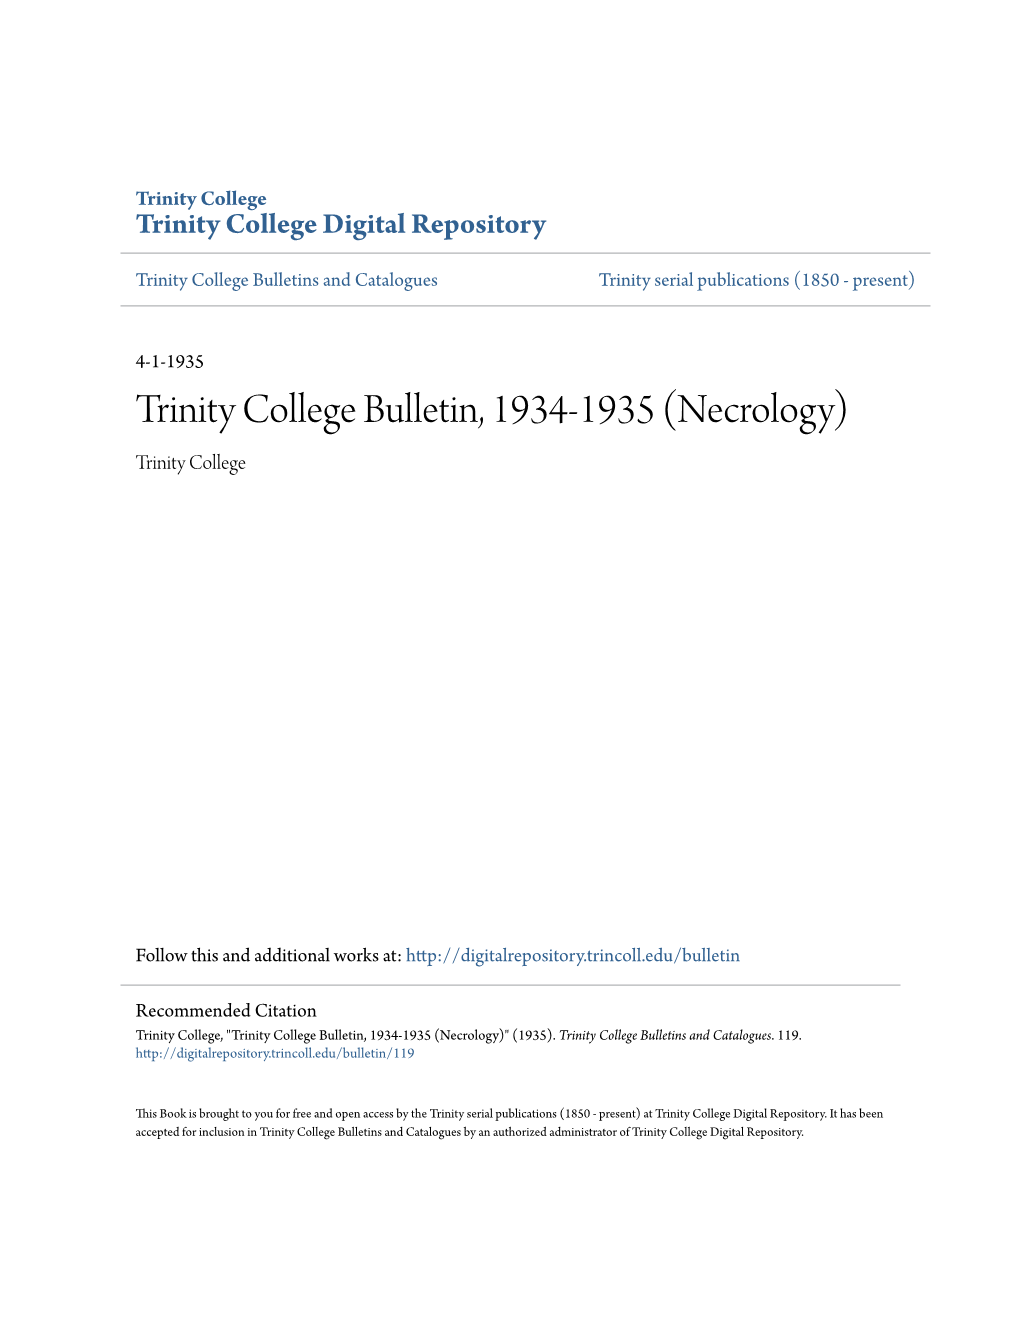 Trinity College Bulletin, 1934-1935 (Necrology) Trinity College